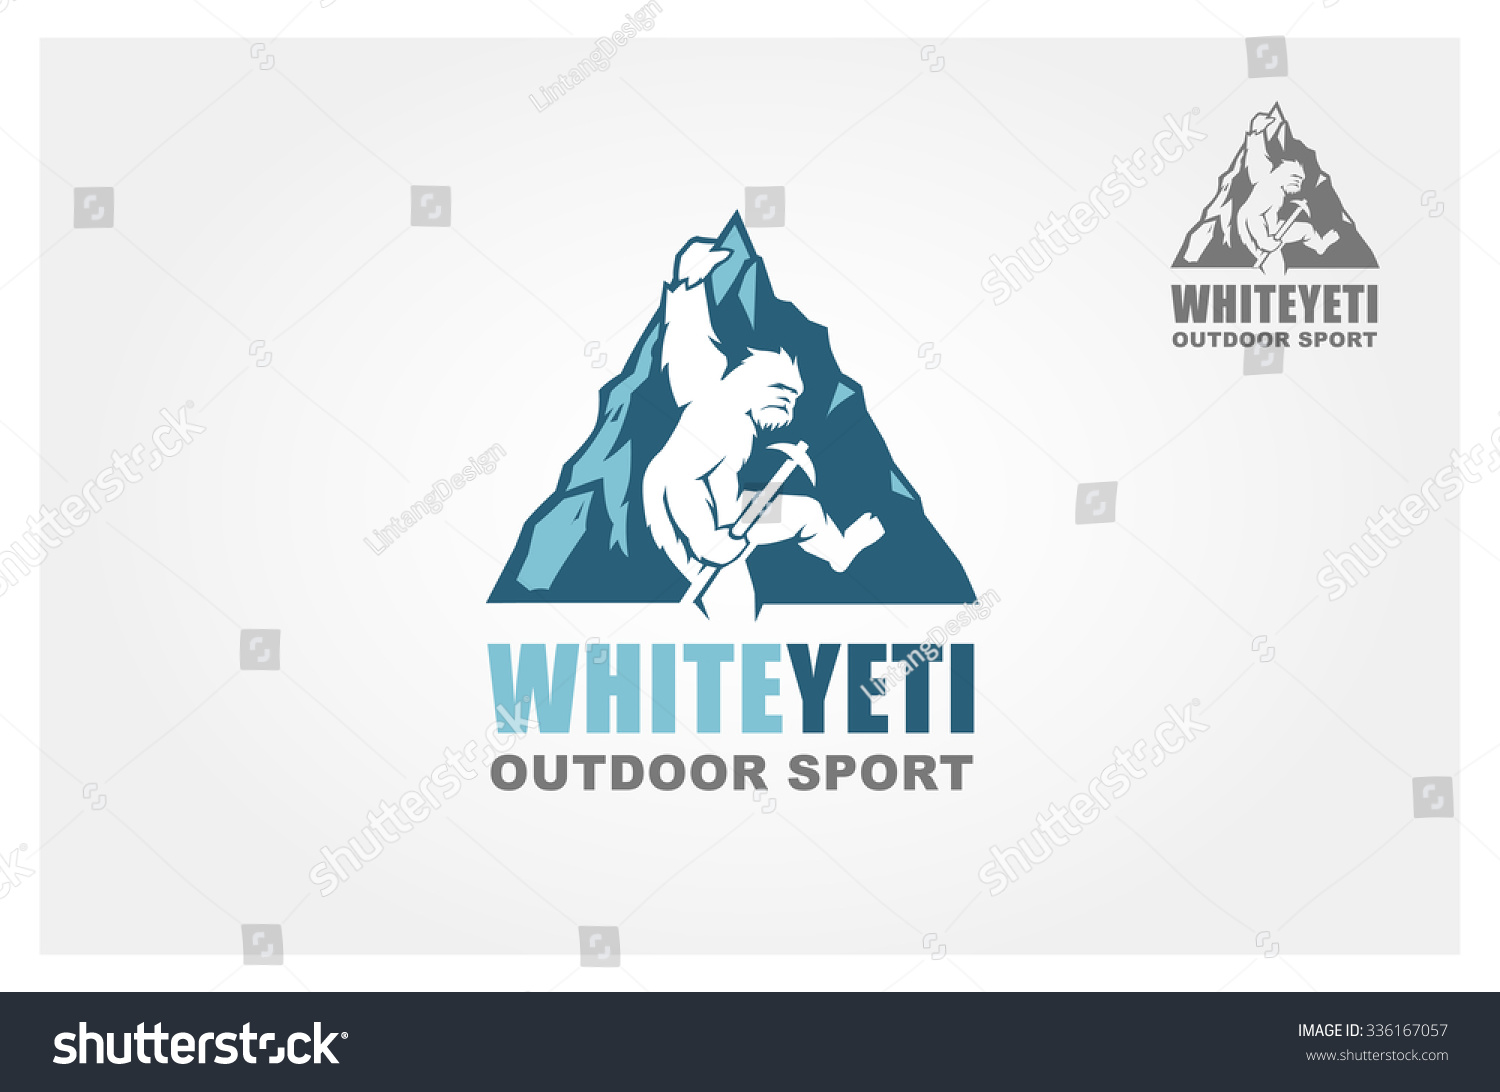 Yeti, Vector Logo Template - 336167057 : Shutterstock